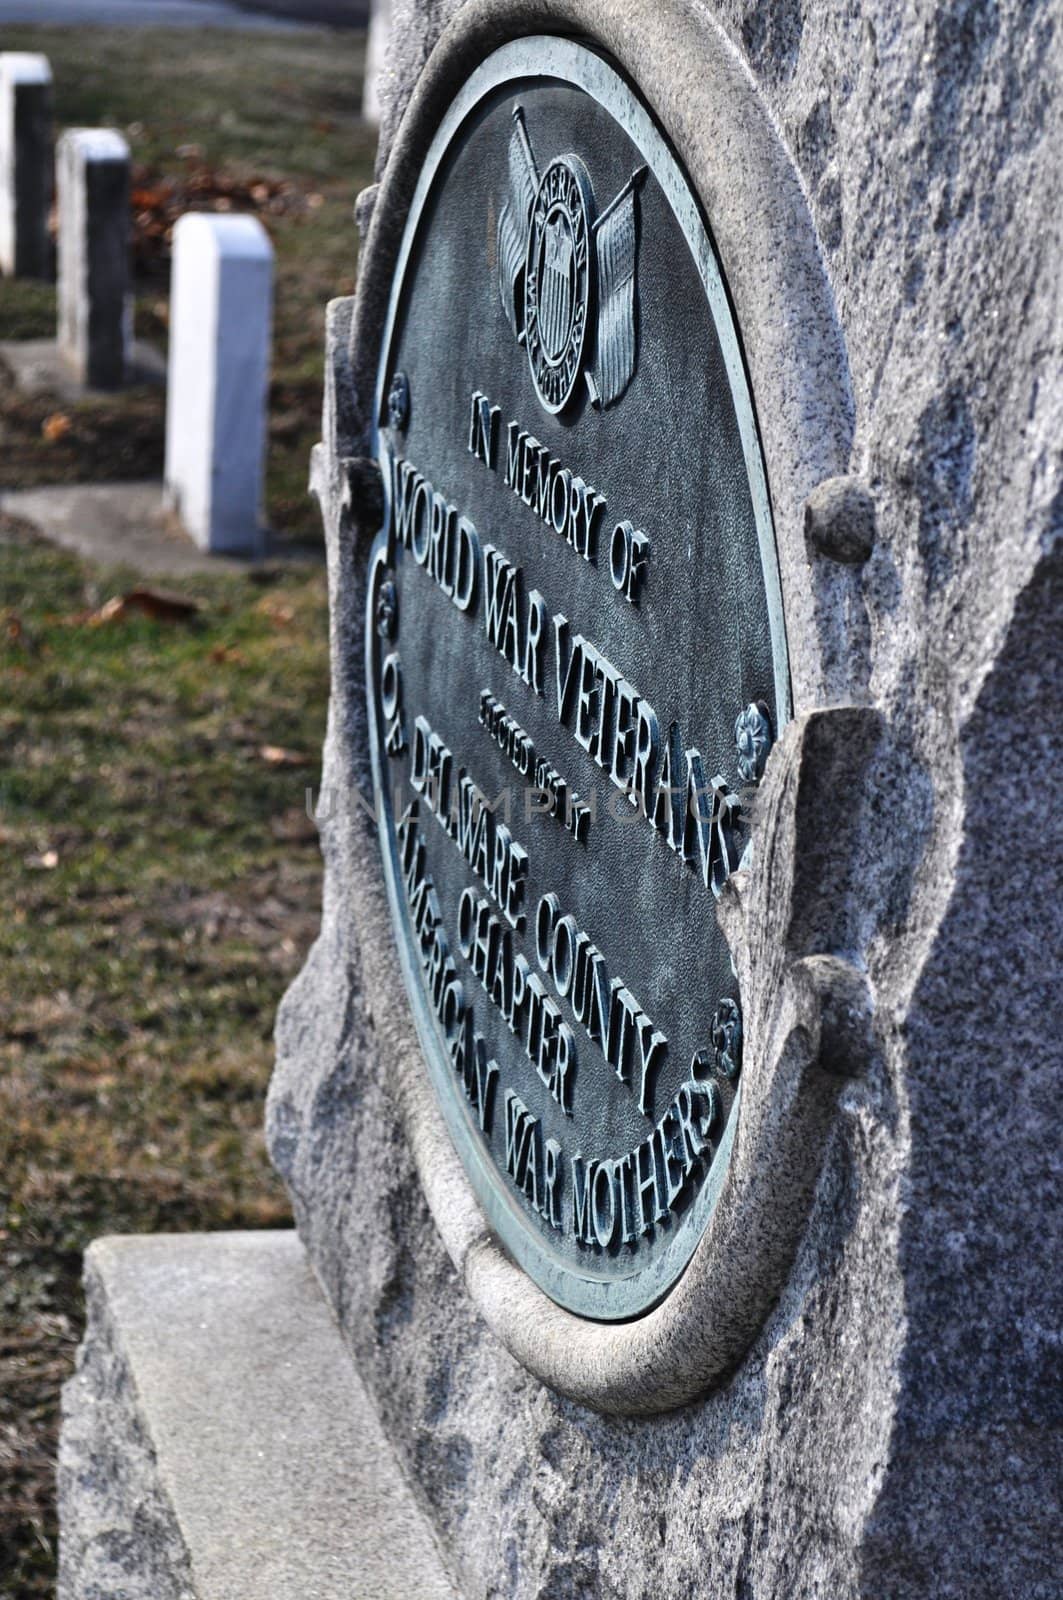 Cemetery Headstone - world war veterans by RefocusPhoto